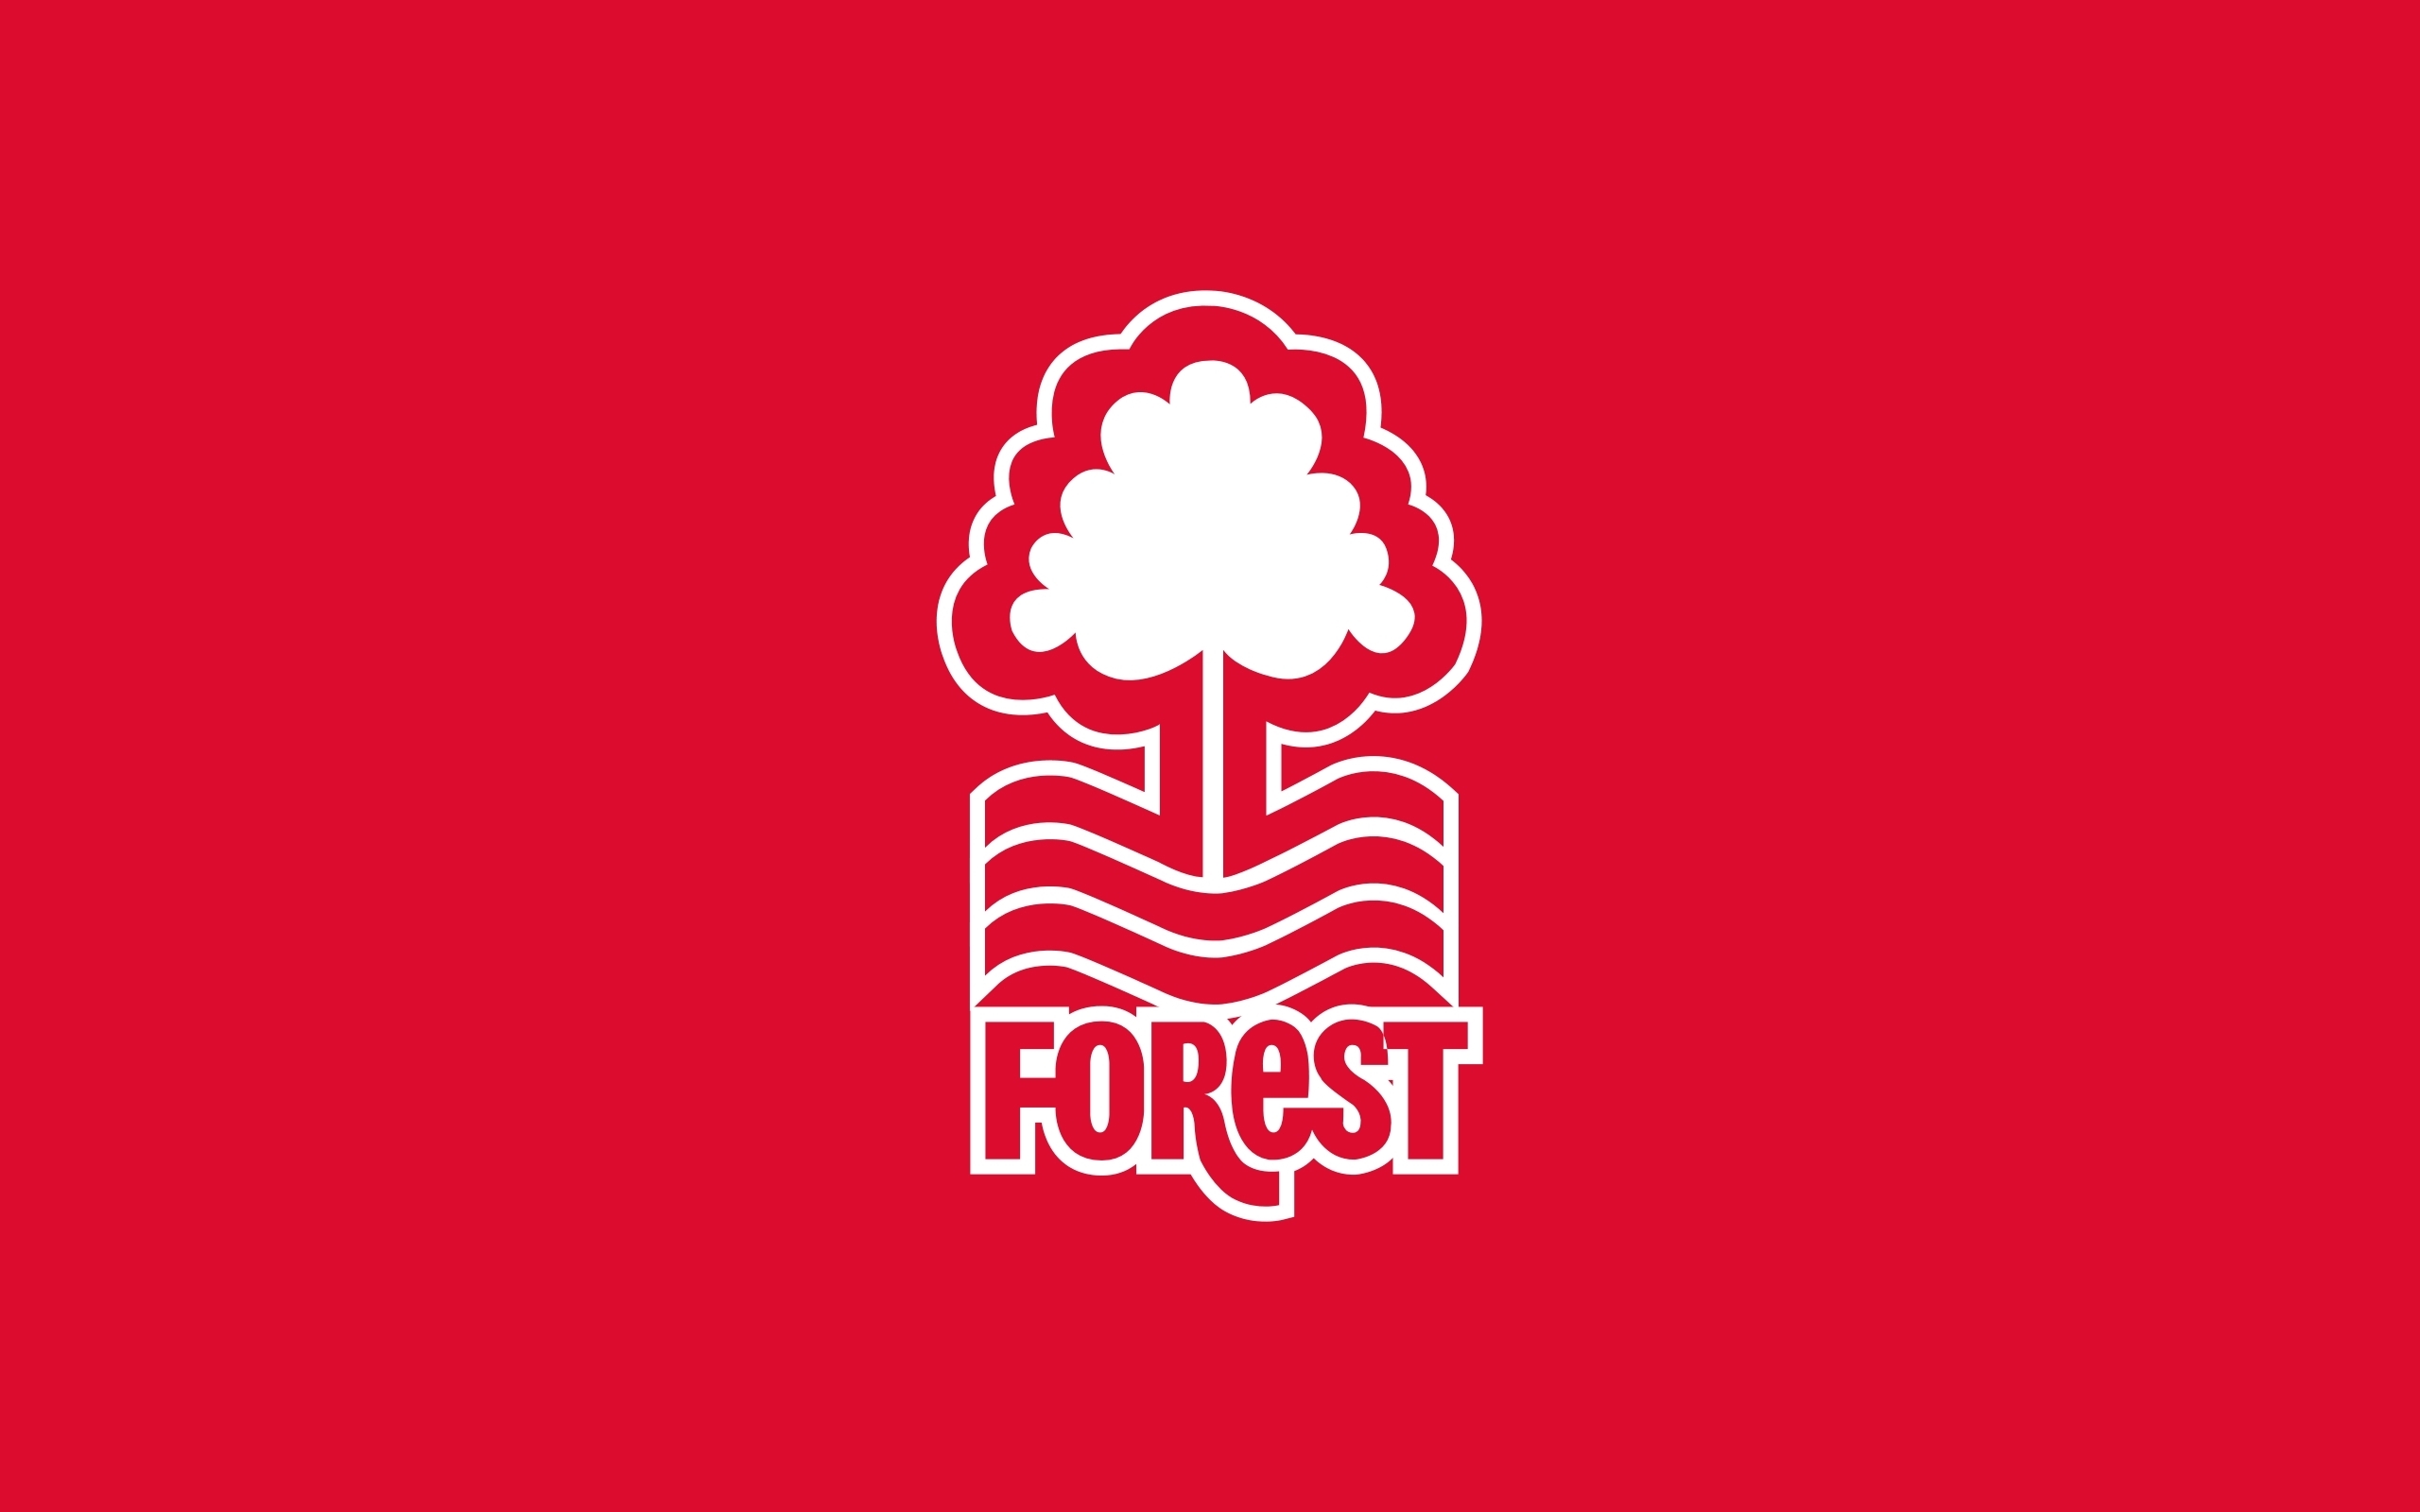 Nottingham Forest Primary logo v2 t shirt iron on transfers